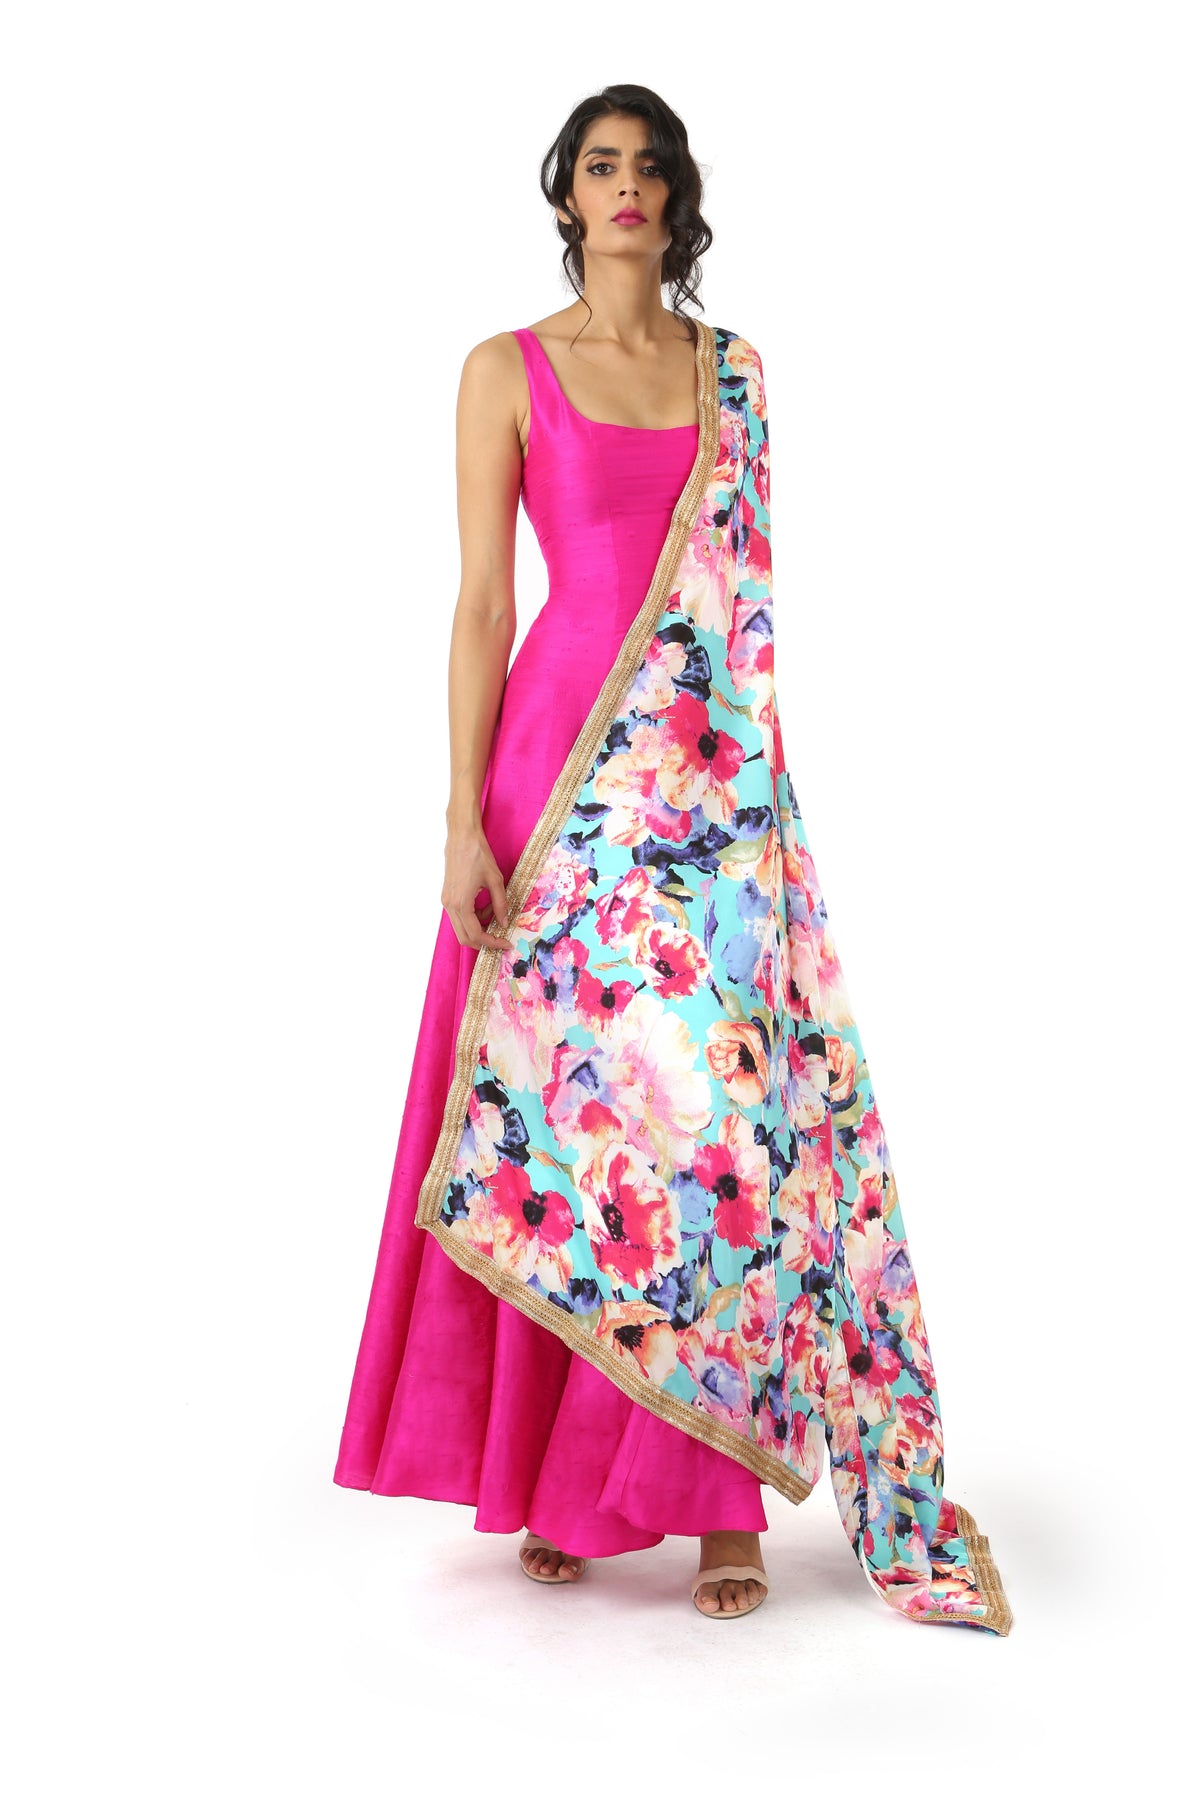 Harleen Kaur GINA Floral Print Dupatta in Teal Multi with Fuchsia Anarkali Dress